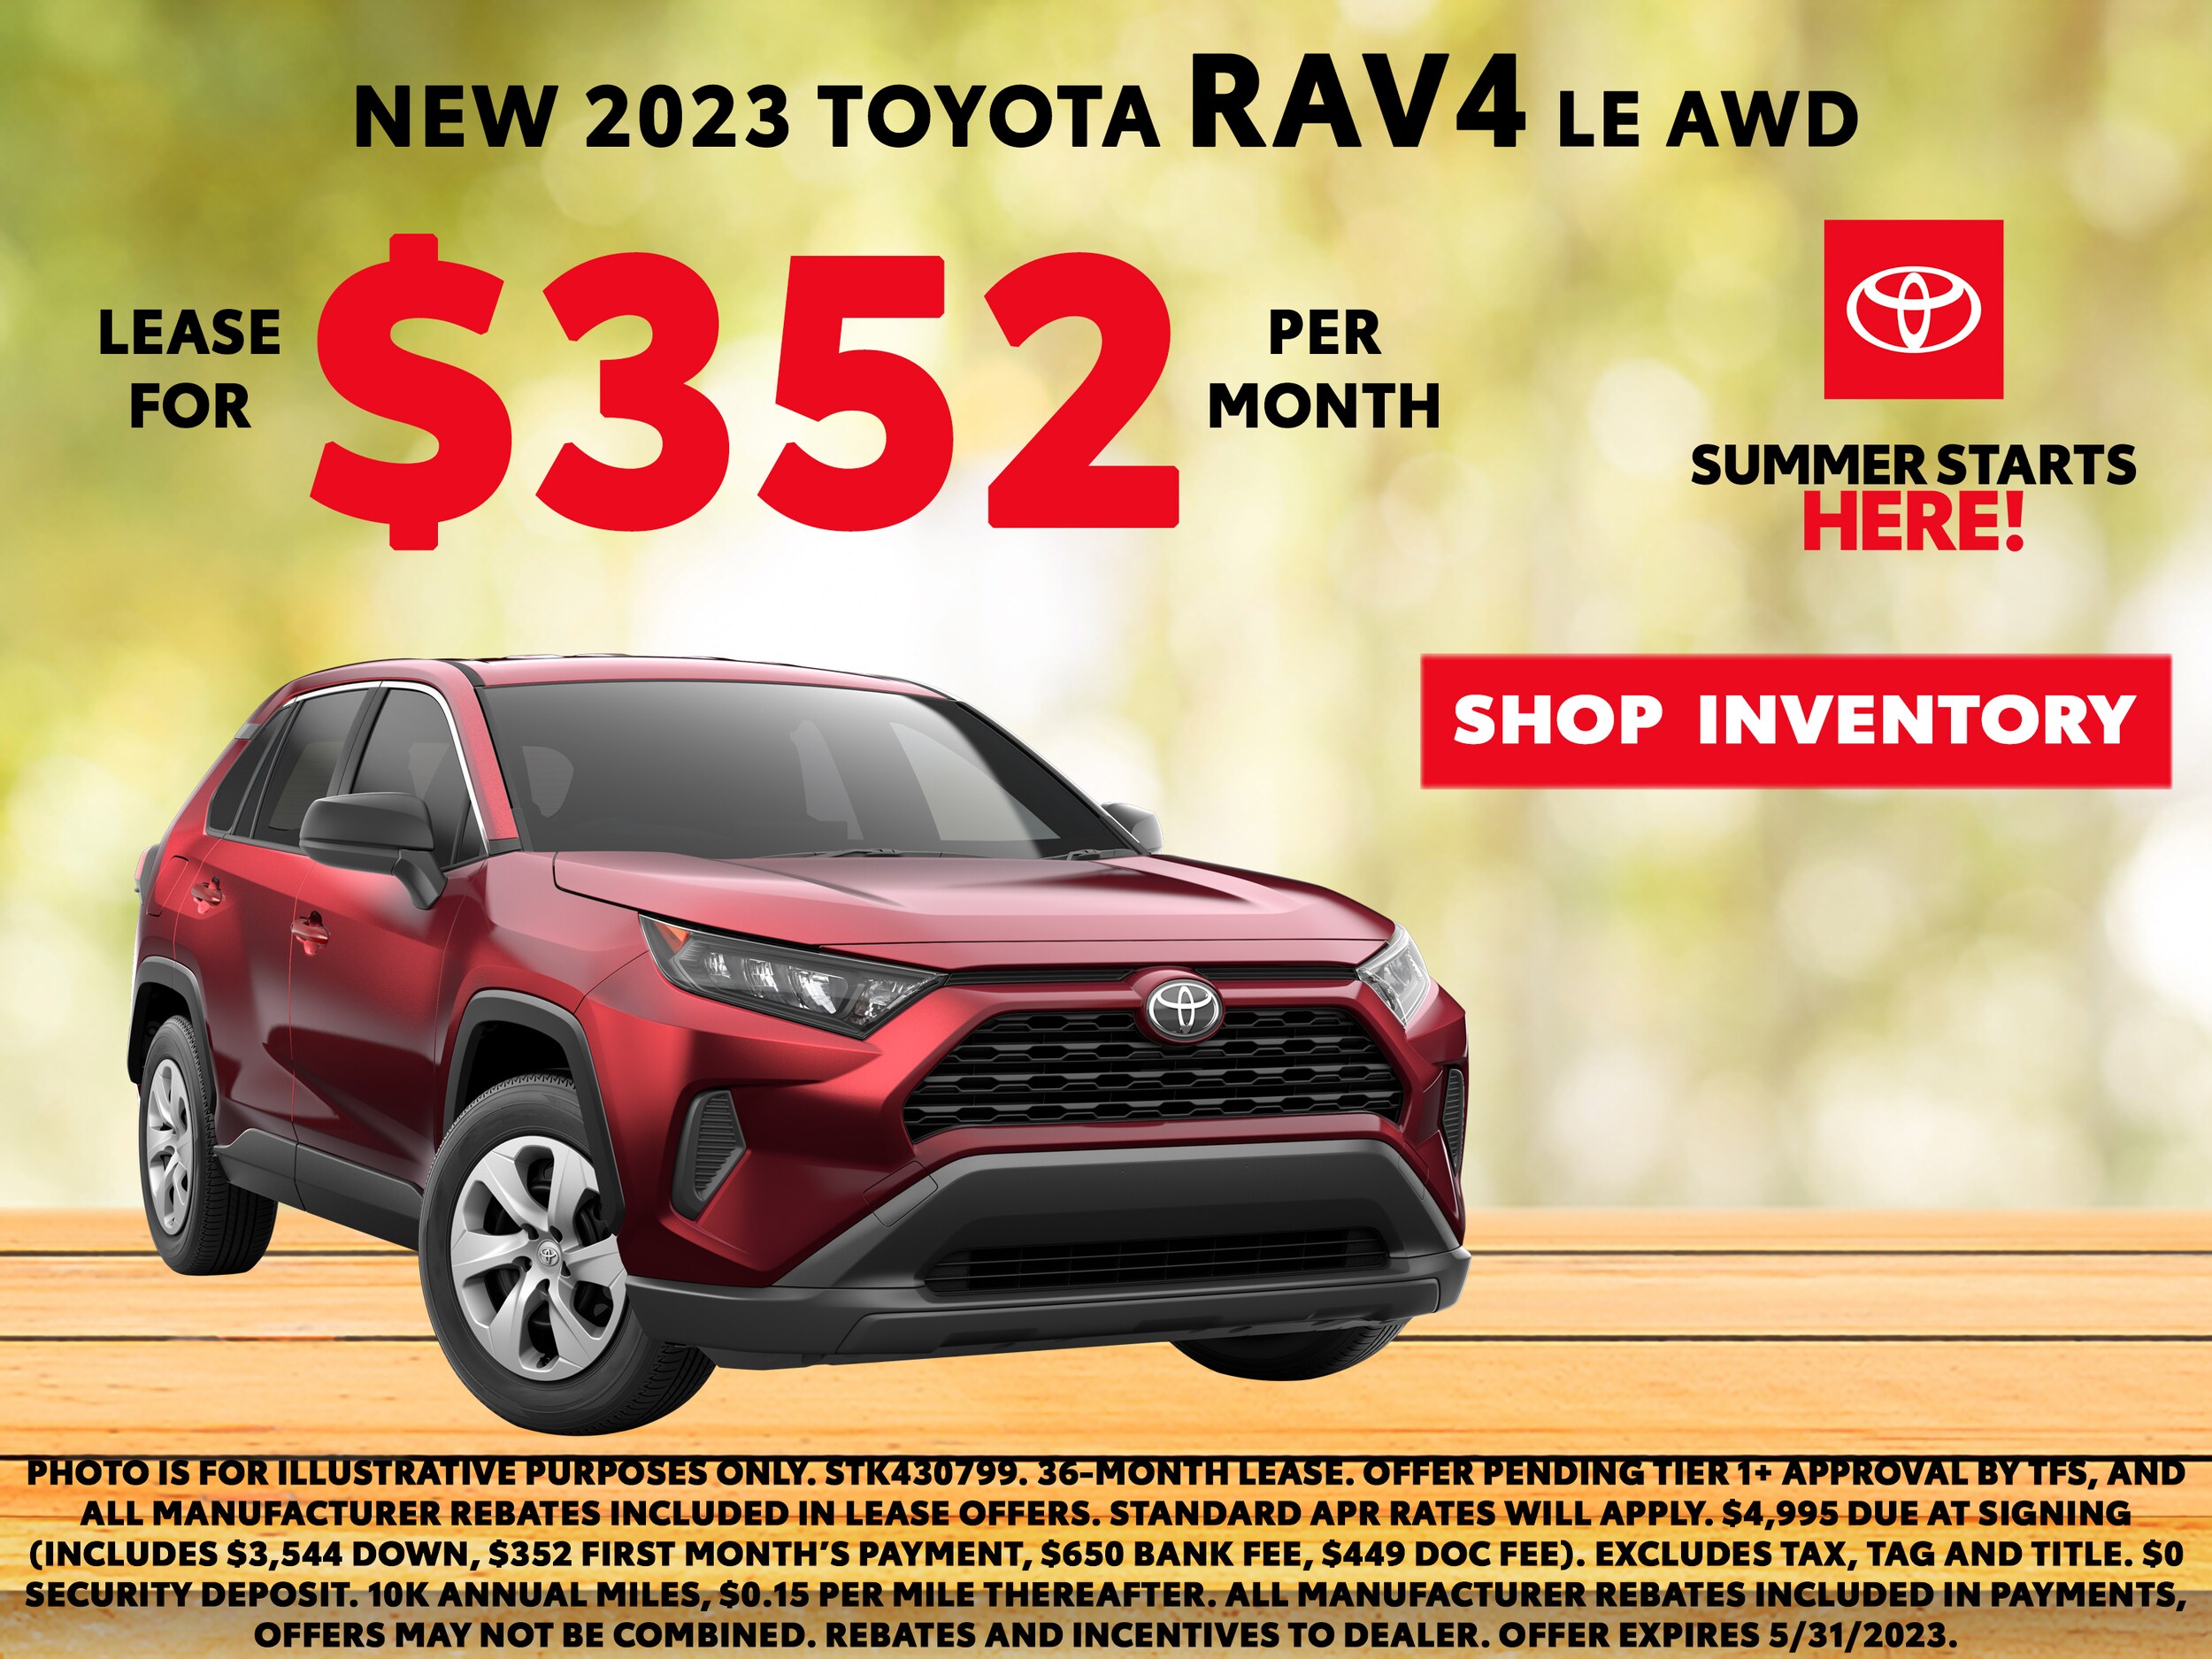 2023 Toyota RAV4 Lease Deal (352/Month) Valid Thru 5/31/23